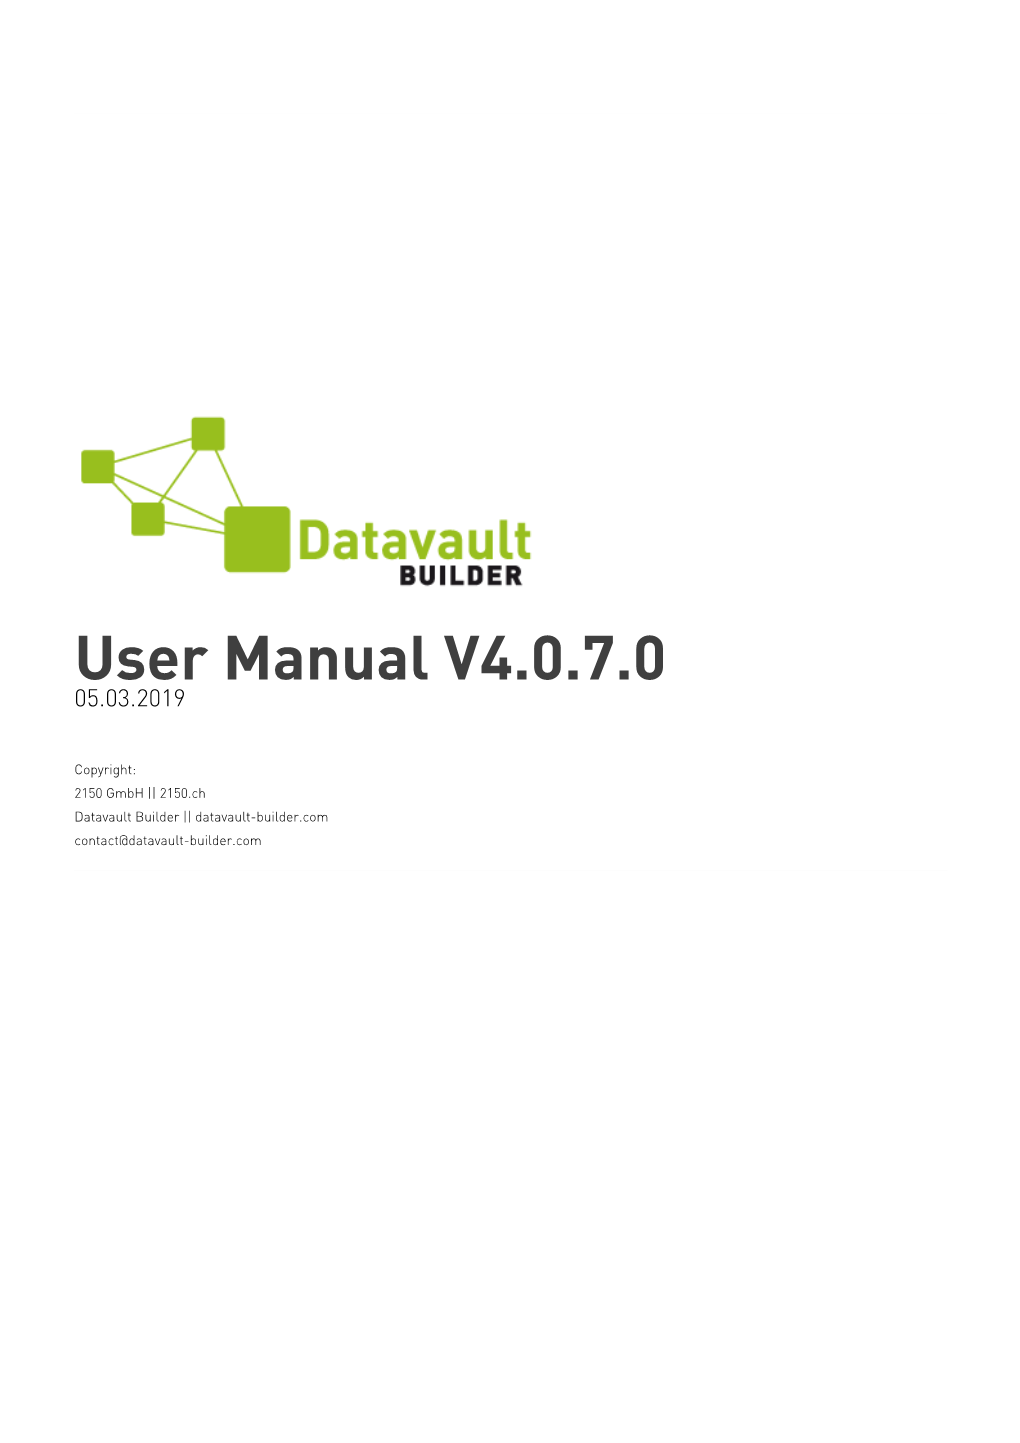 Datavault Builder User Manual